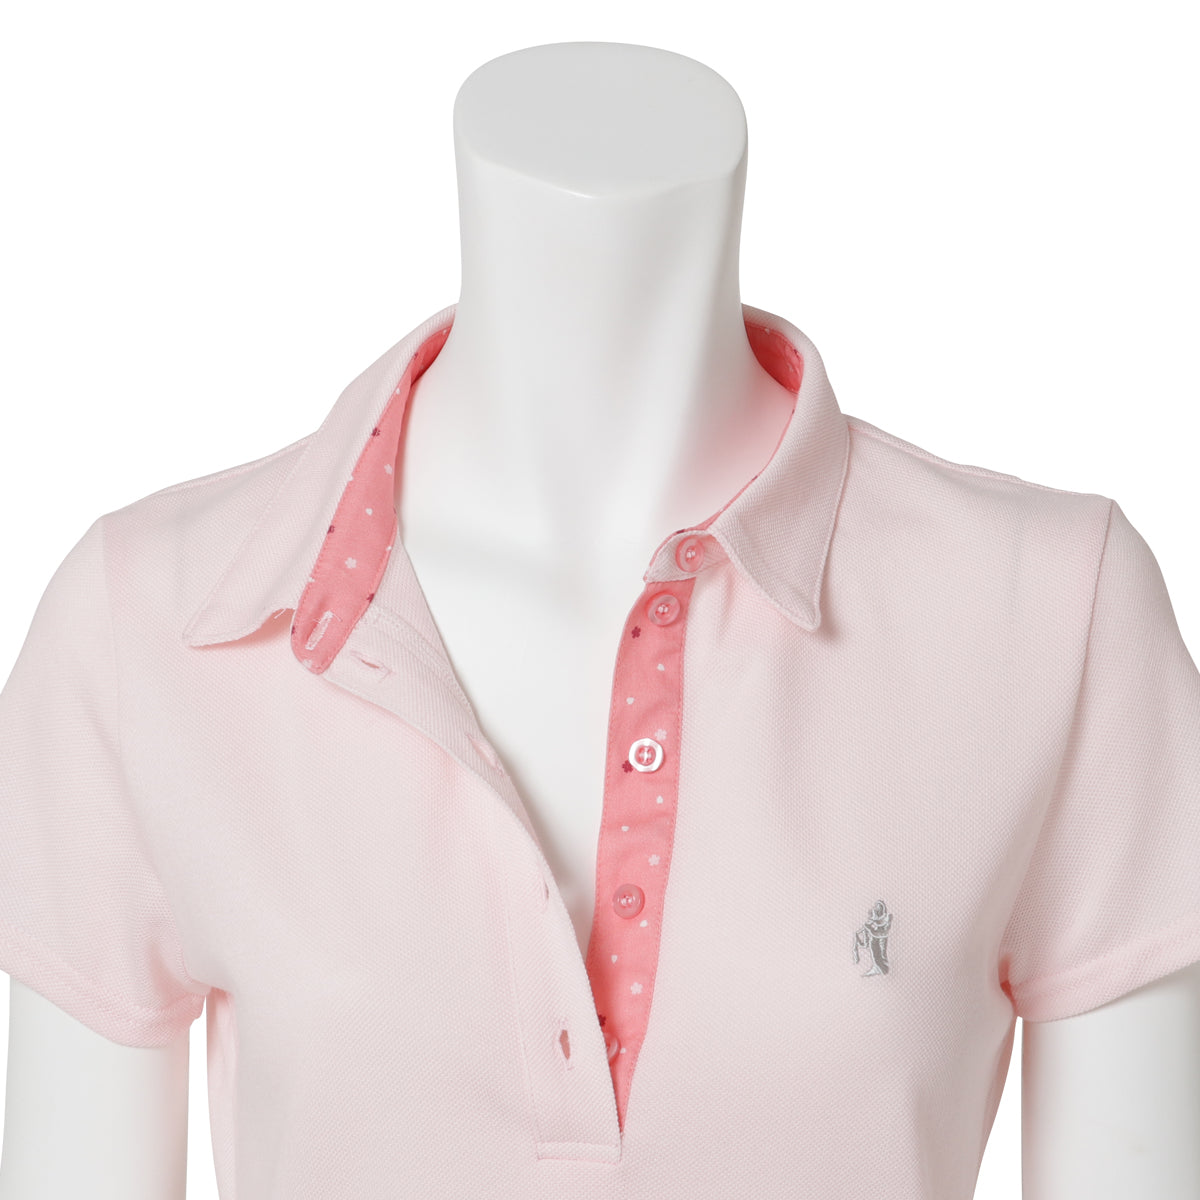 Ladies' Polo Shirt Short Sleeve 100% Cotton -15. Sakura Cherry Blossoms Design Made in Japan FORTUNA Tokyo